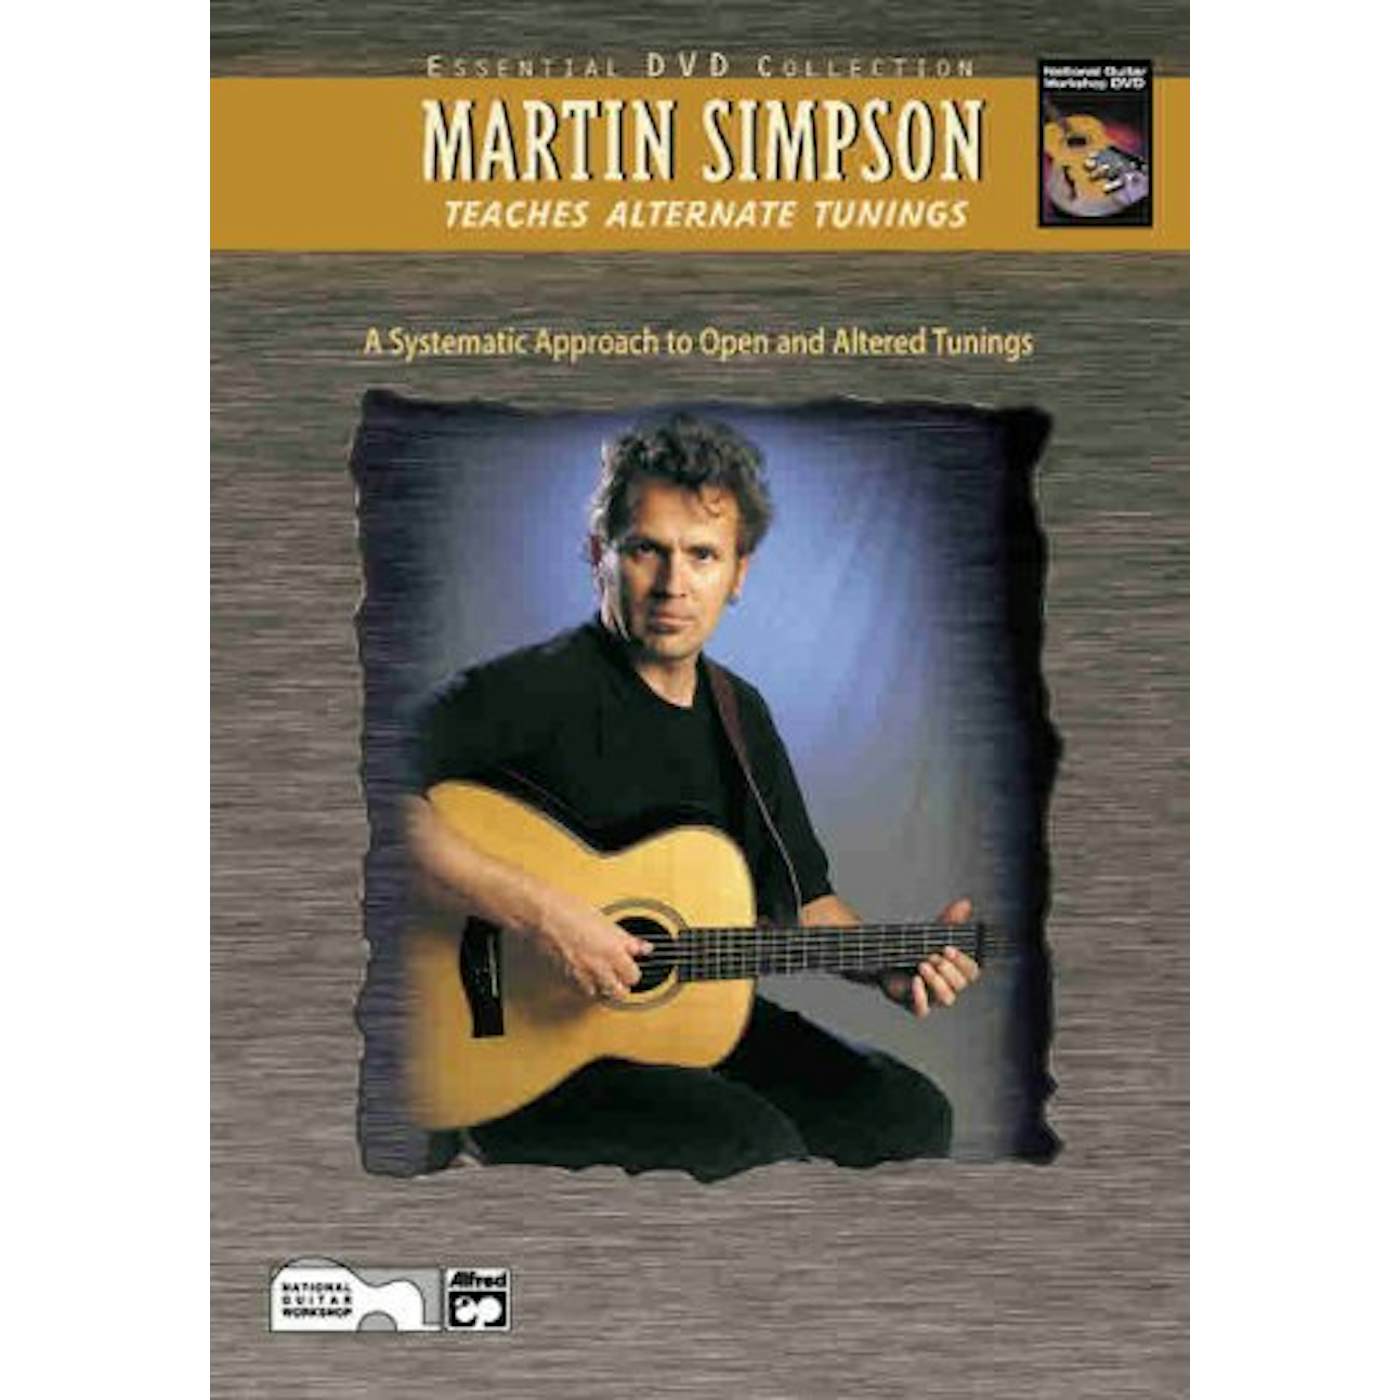 Martin Simpson TEACHES ALTERNATE TUNINGS DVD